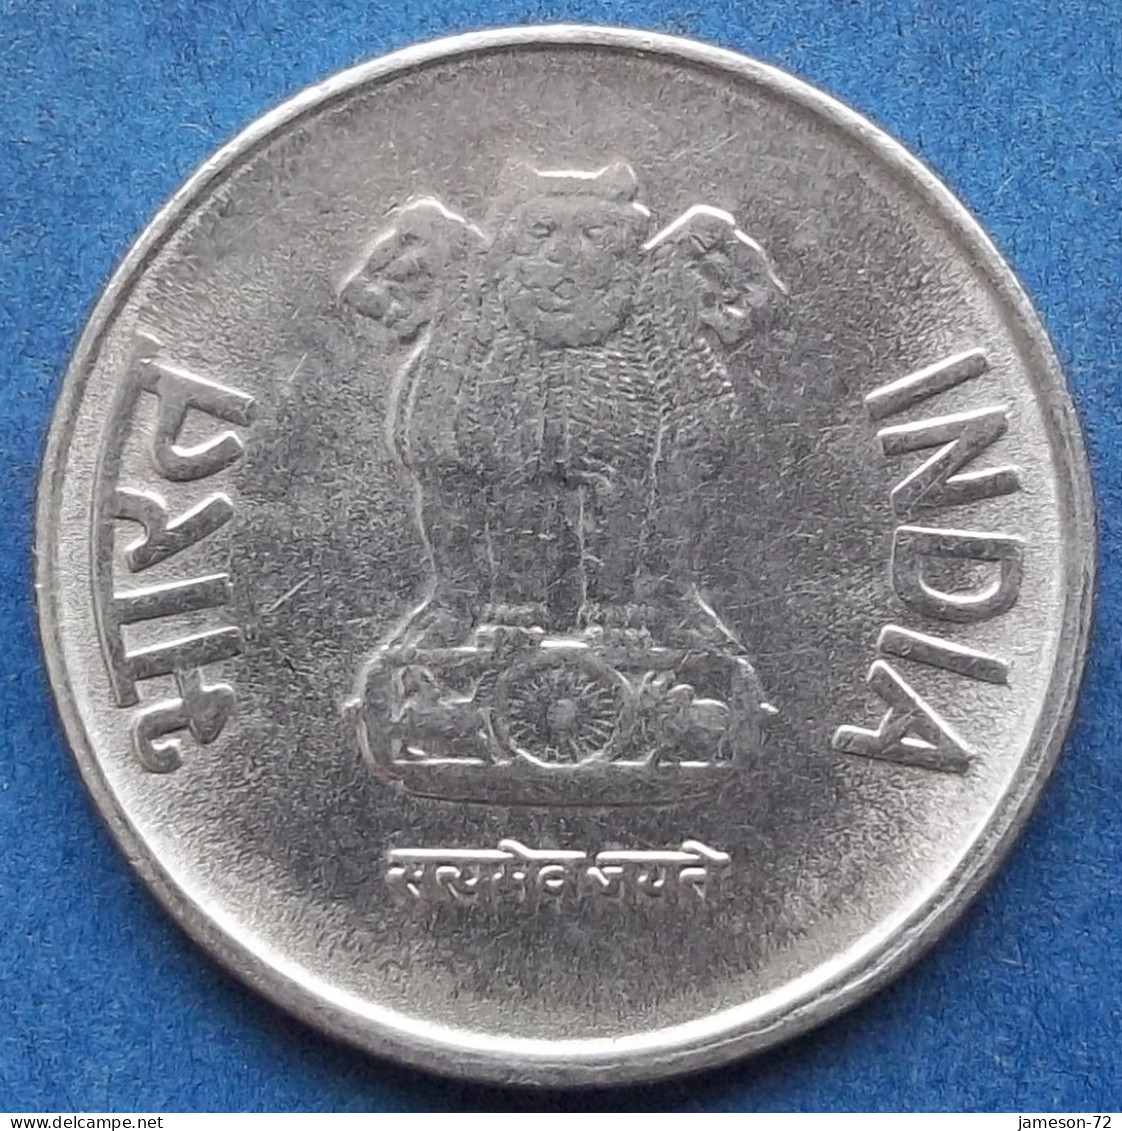 INDIA - 1 Rupee 2014 "Lotus Flowers" KM# 394 Republic Decimal Coinage (1957) - Edelweiss Coins - Georgia